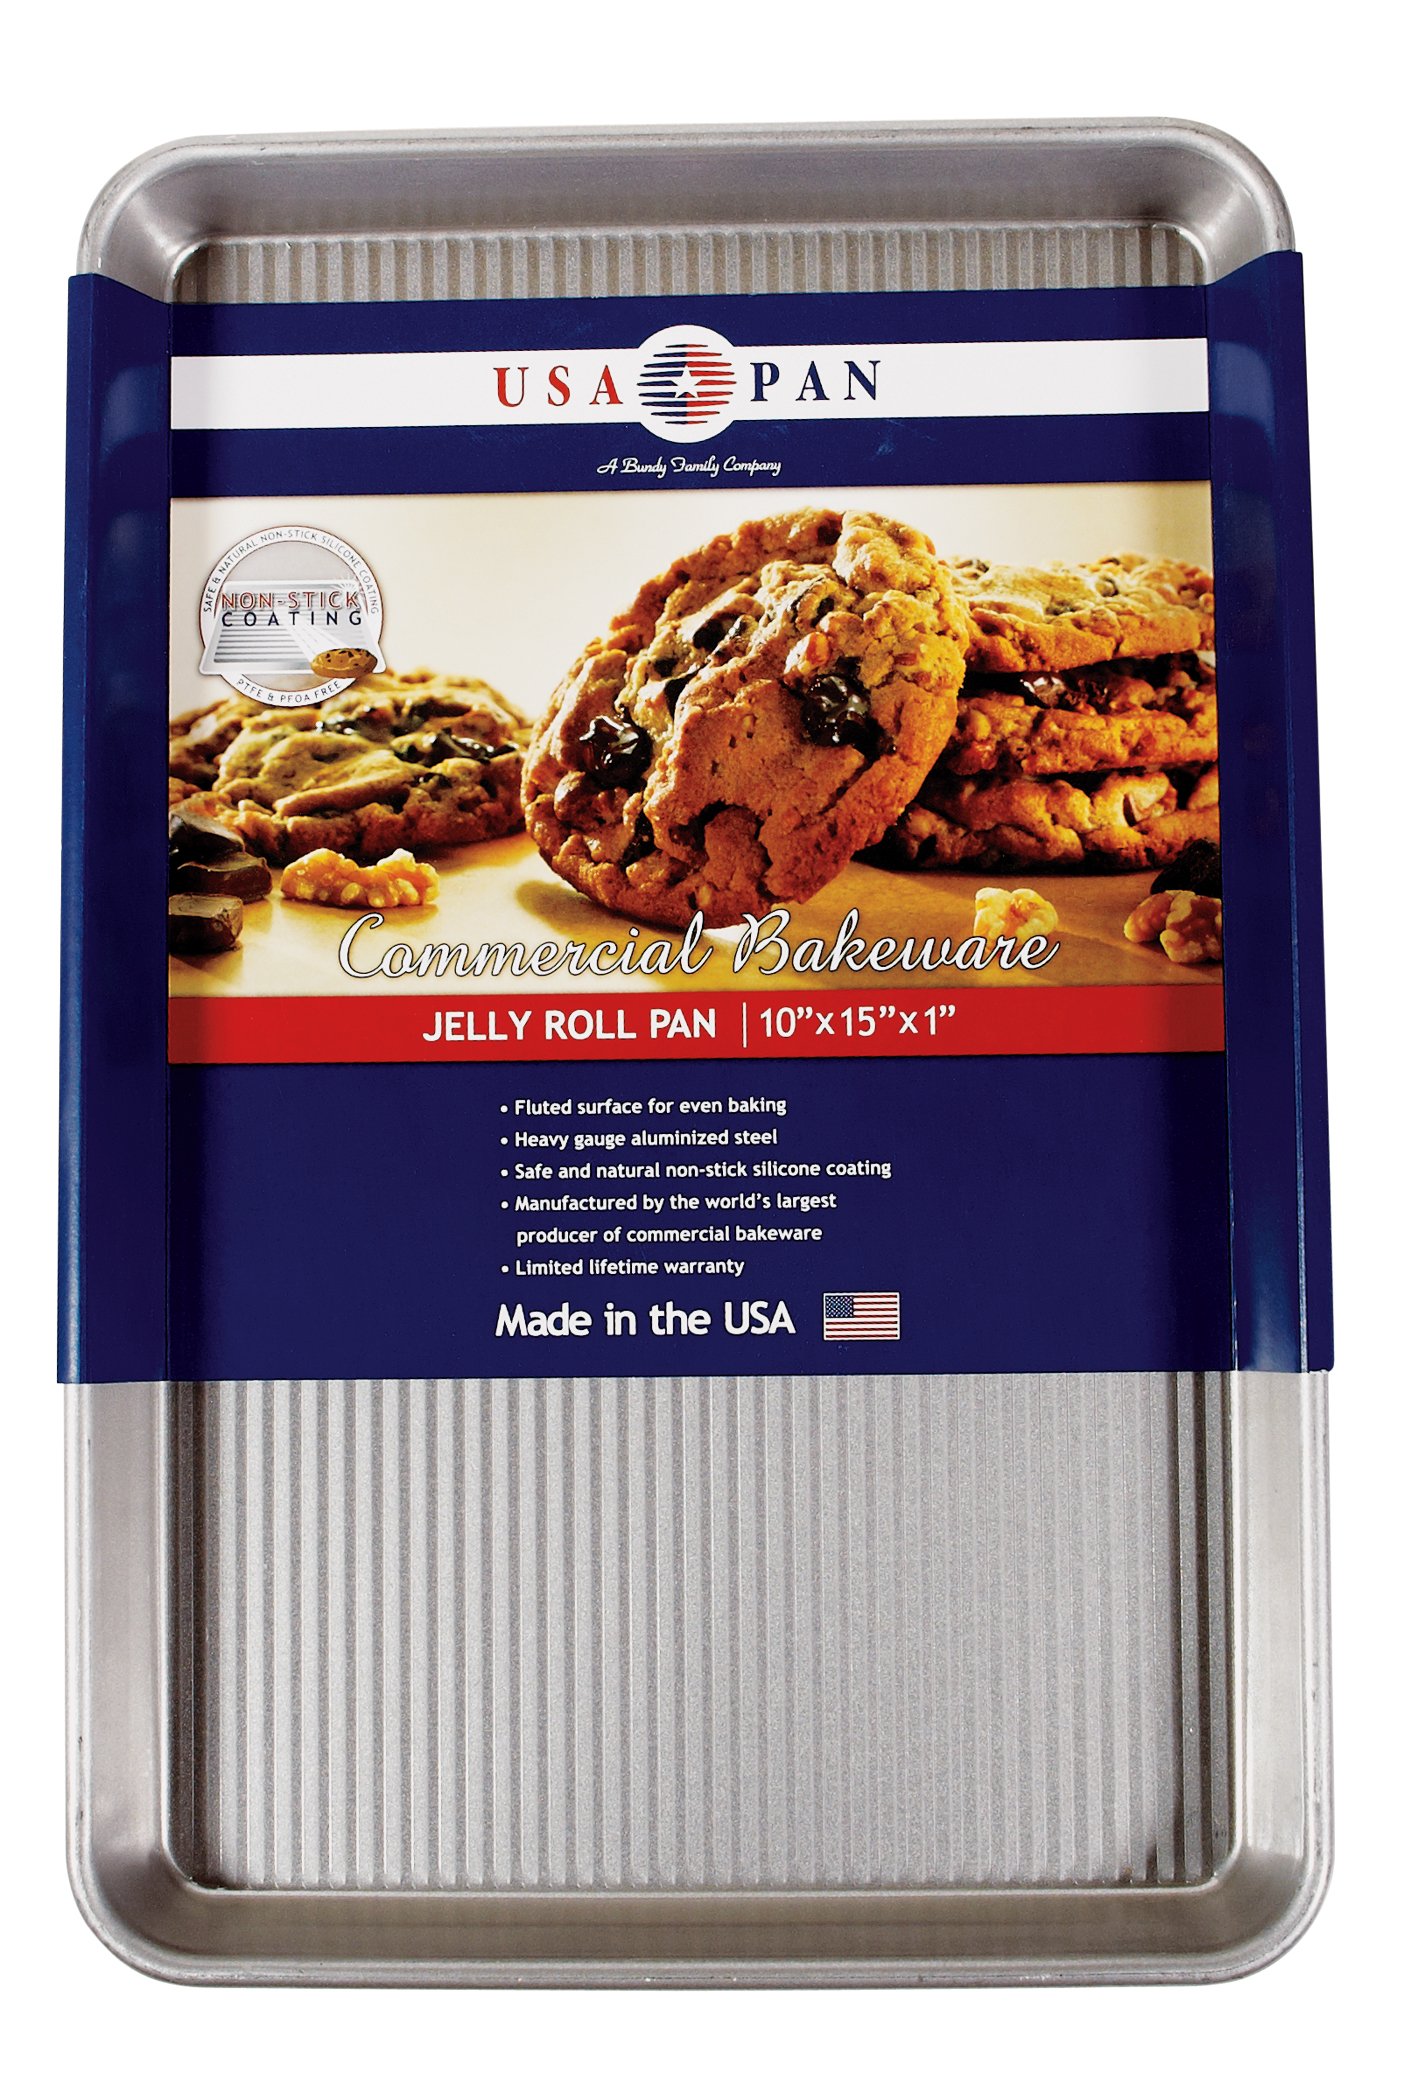 USA Pan Jelly Roll Pan 10 x 15